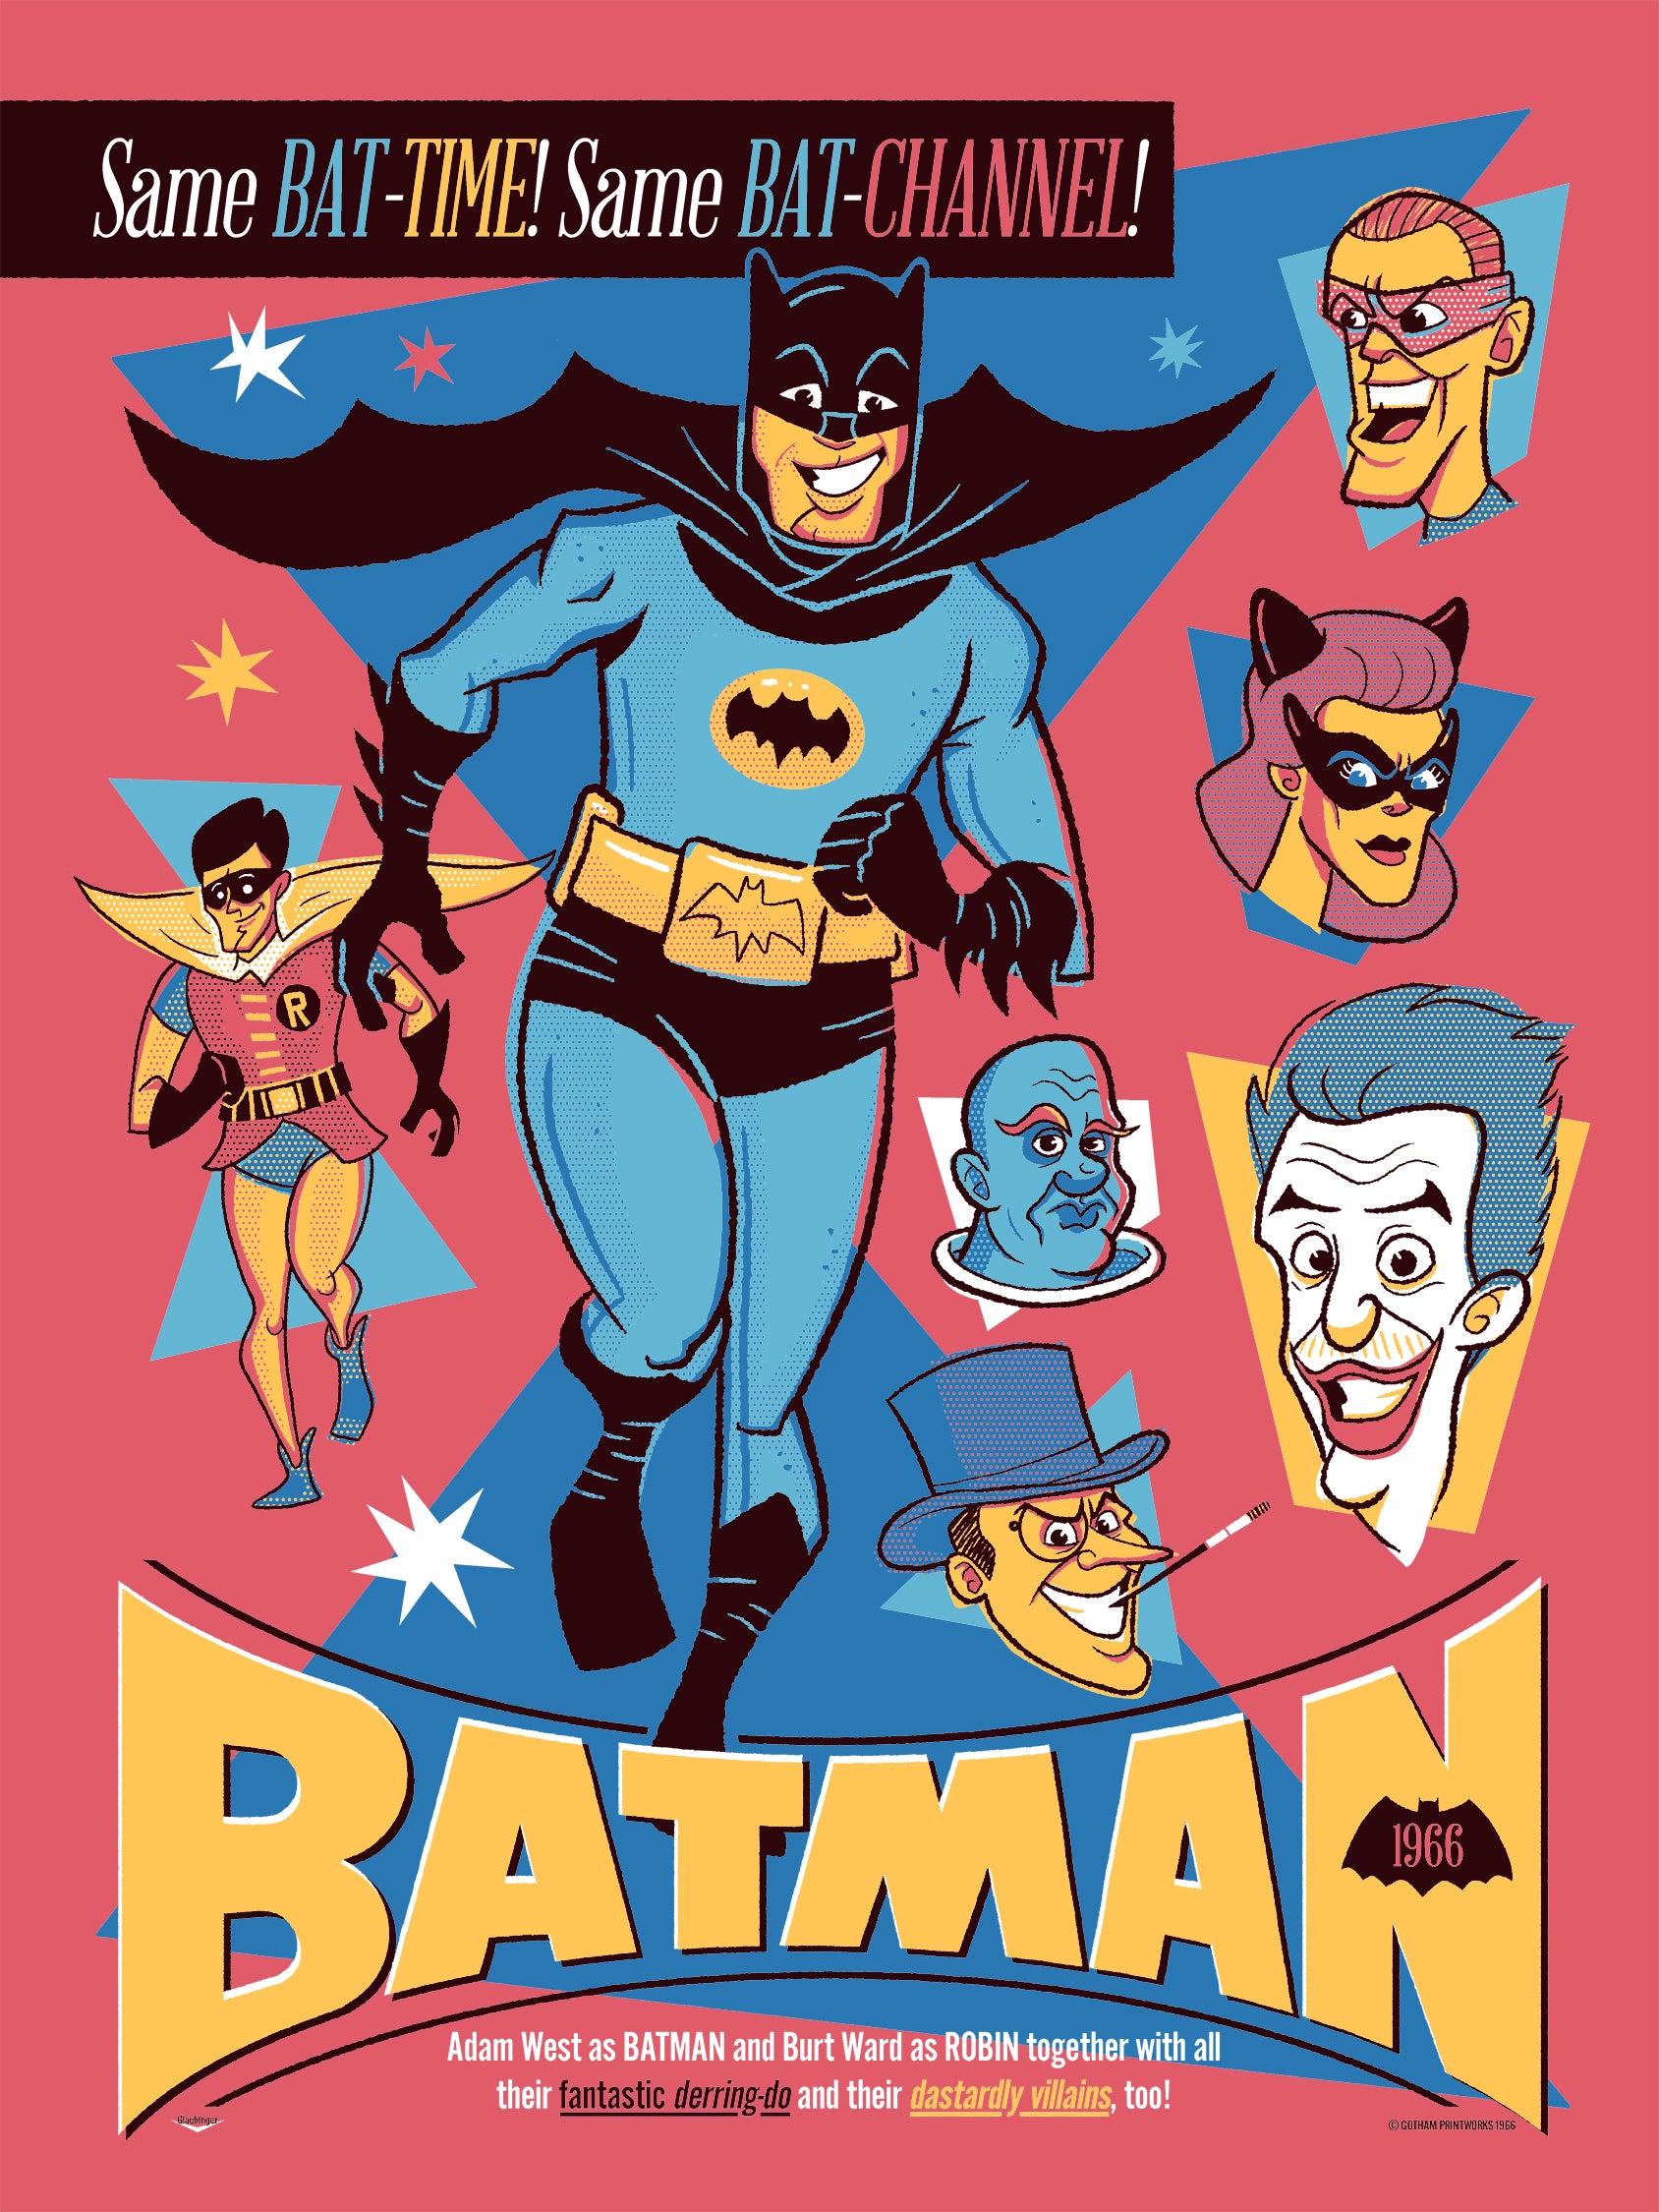 "1966 Batman" by Ian Glaubinger